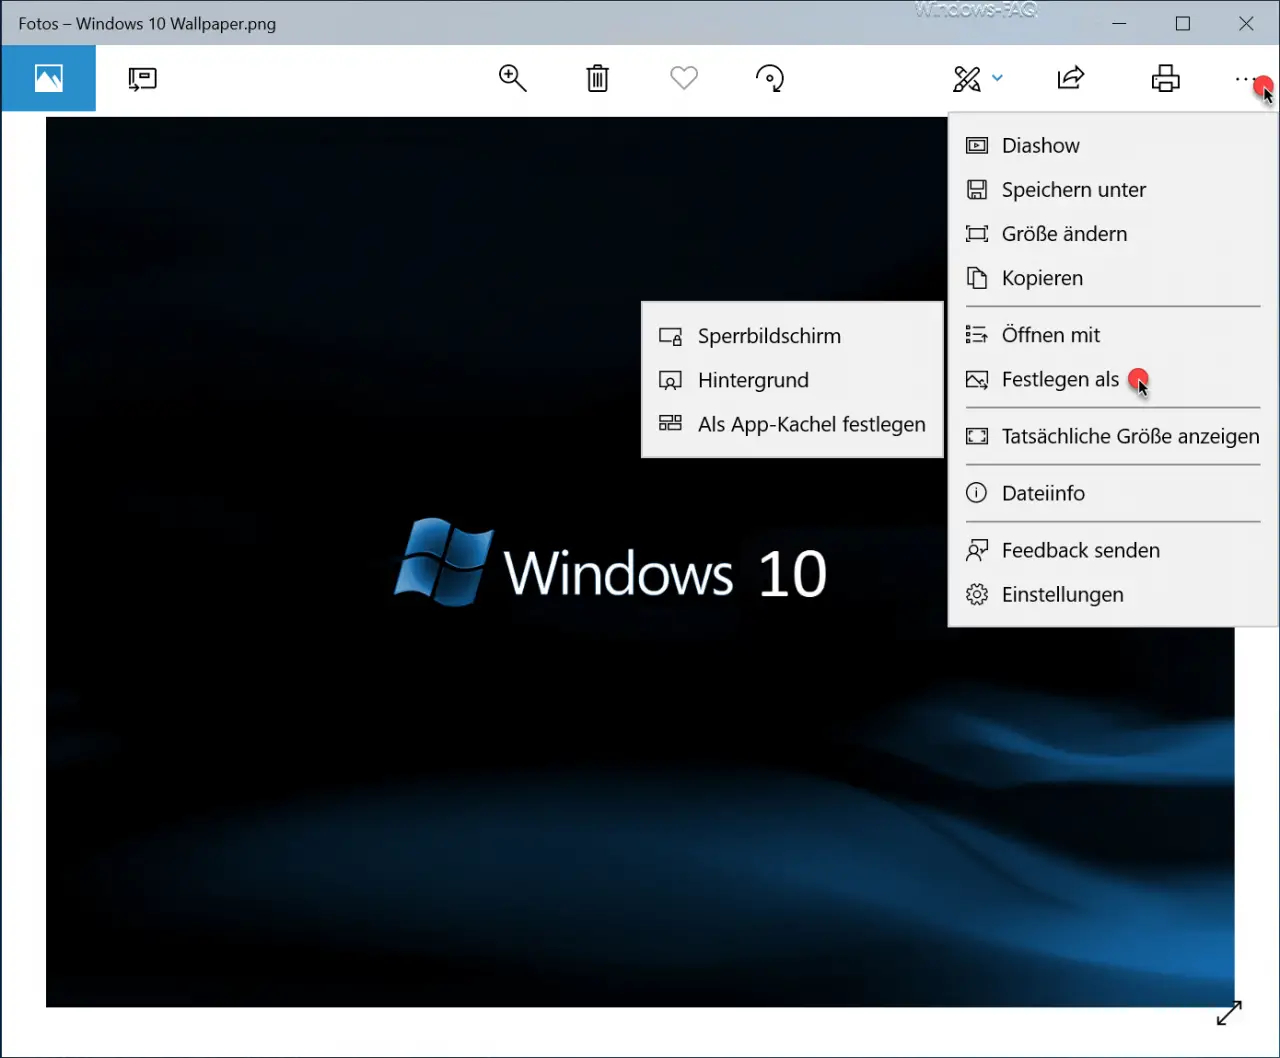 Windows 10 as a lock screen or wallpaper